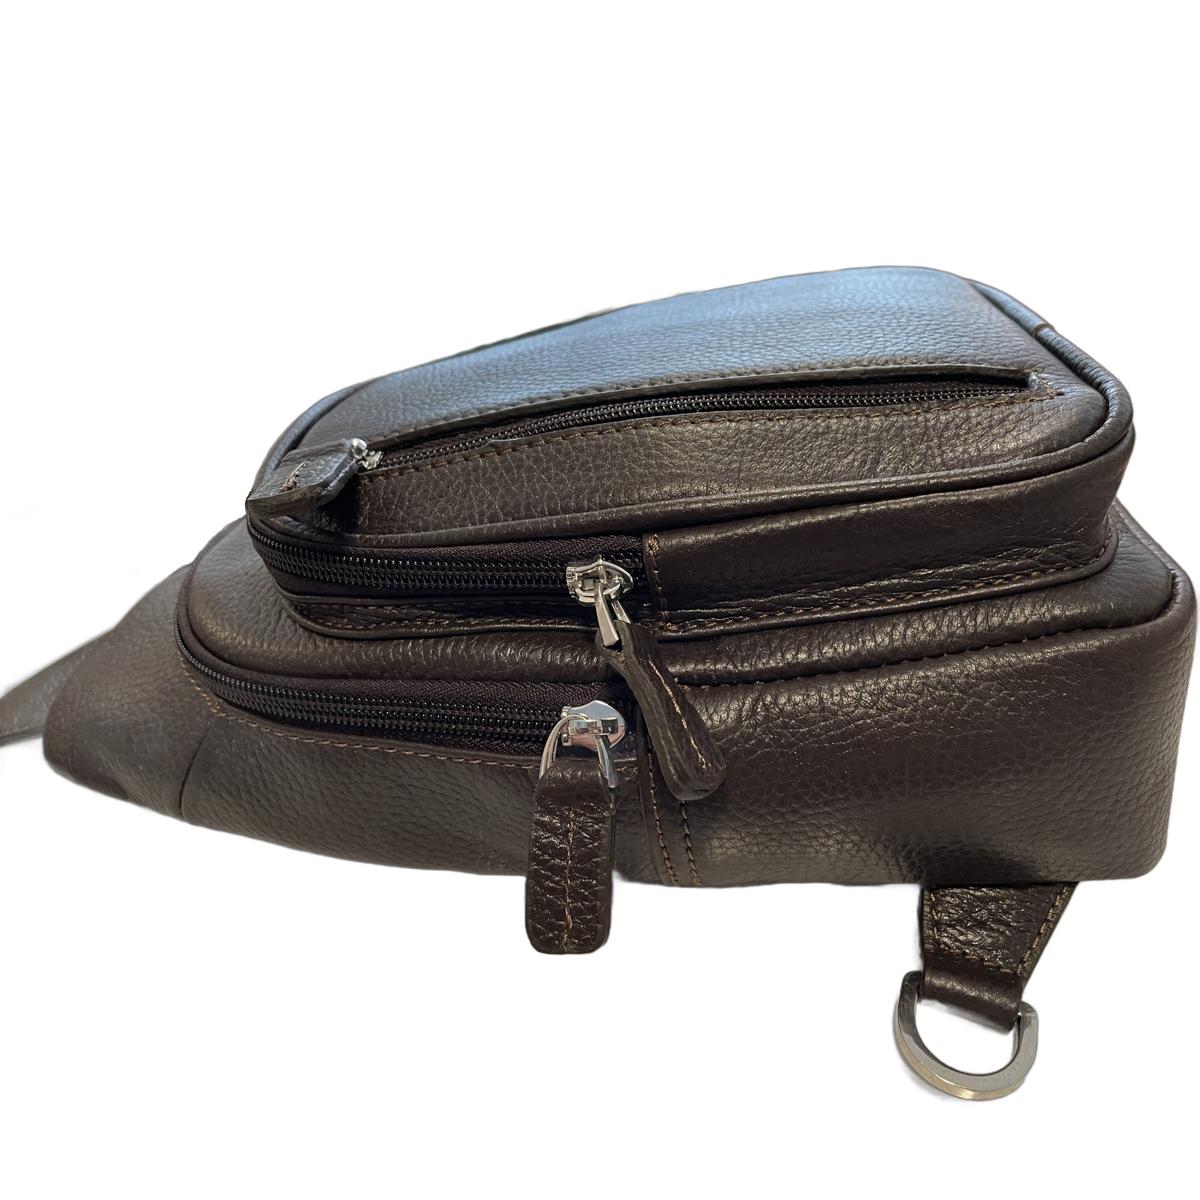 LeatherLuxe - Unisex Sling Bag Shoulder Crossbody